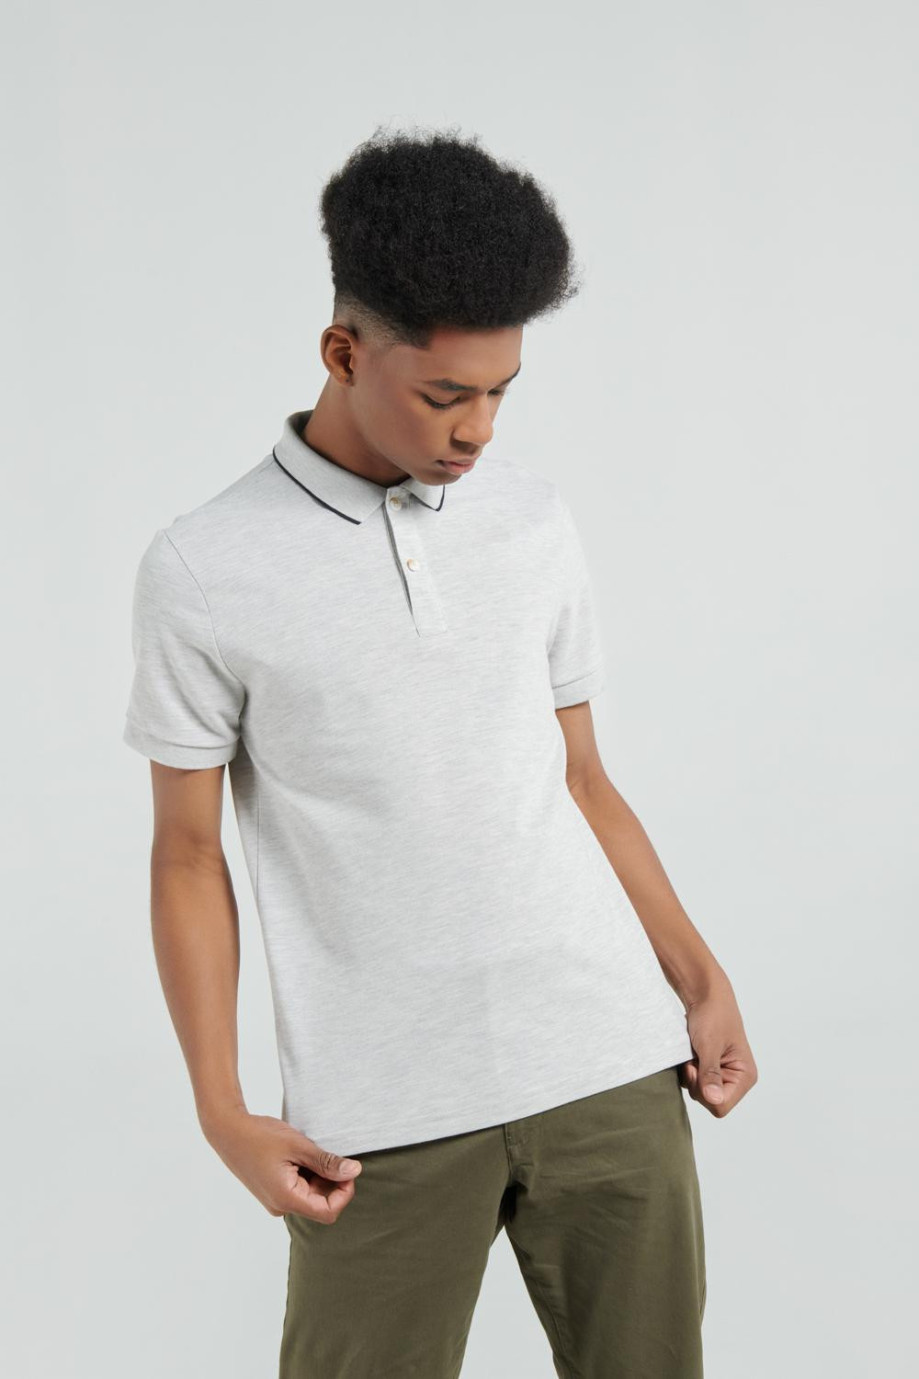 Camiseta gris tipo polo con detalles tejidos y manga corta